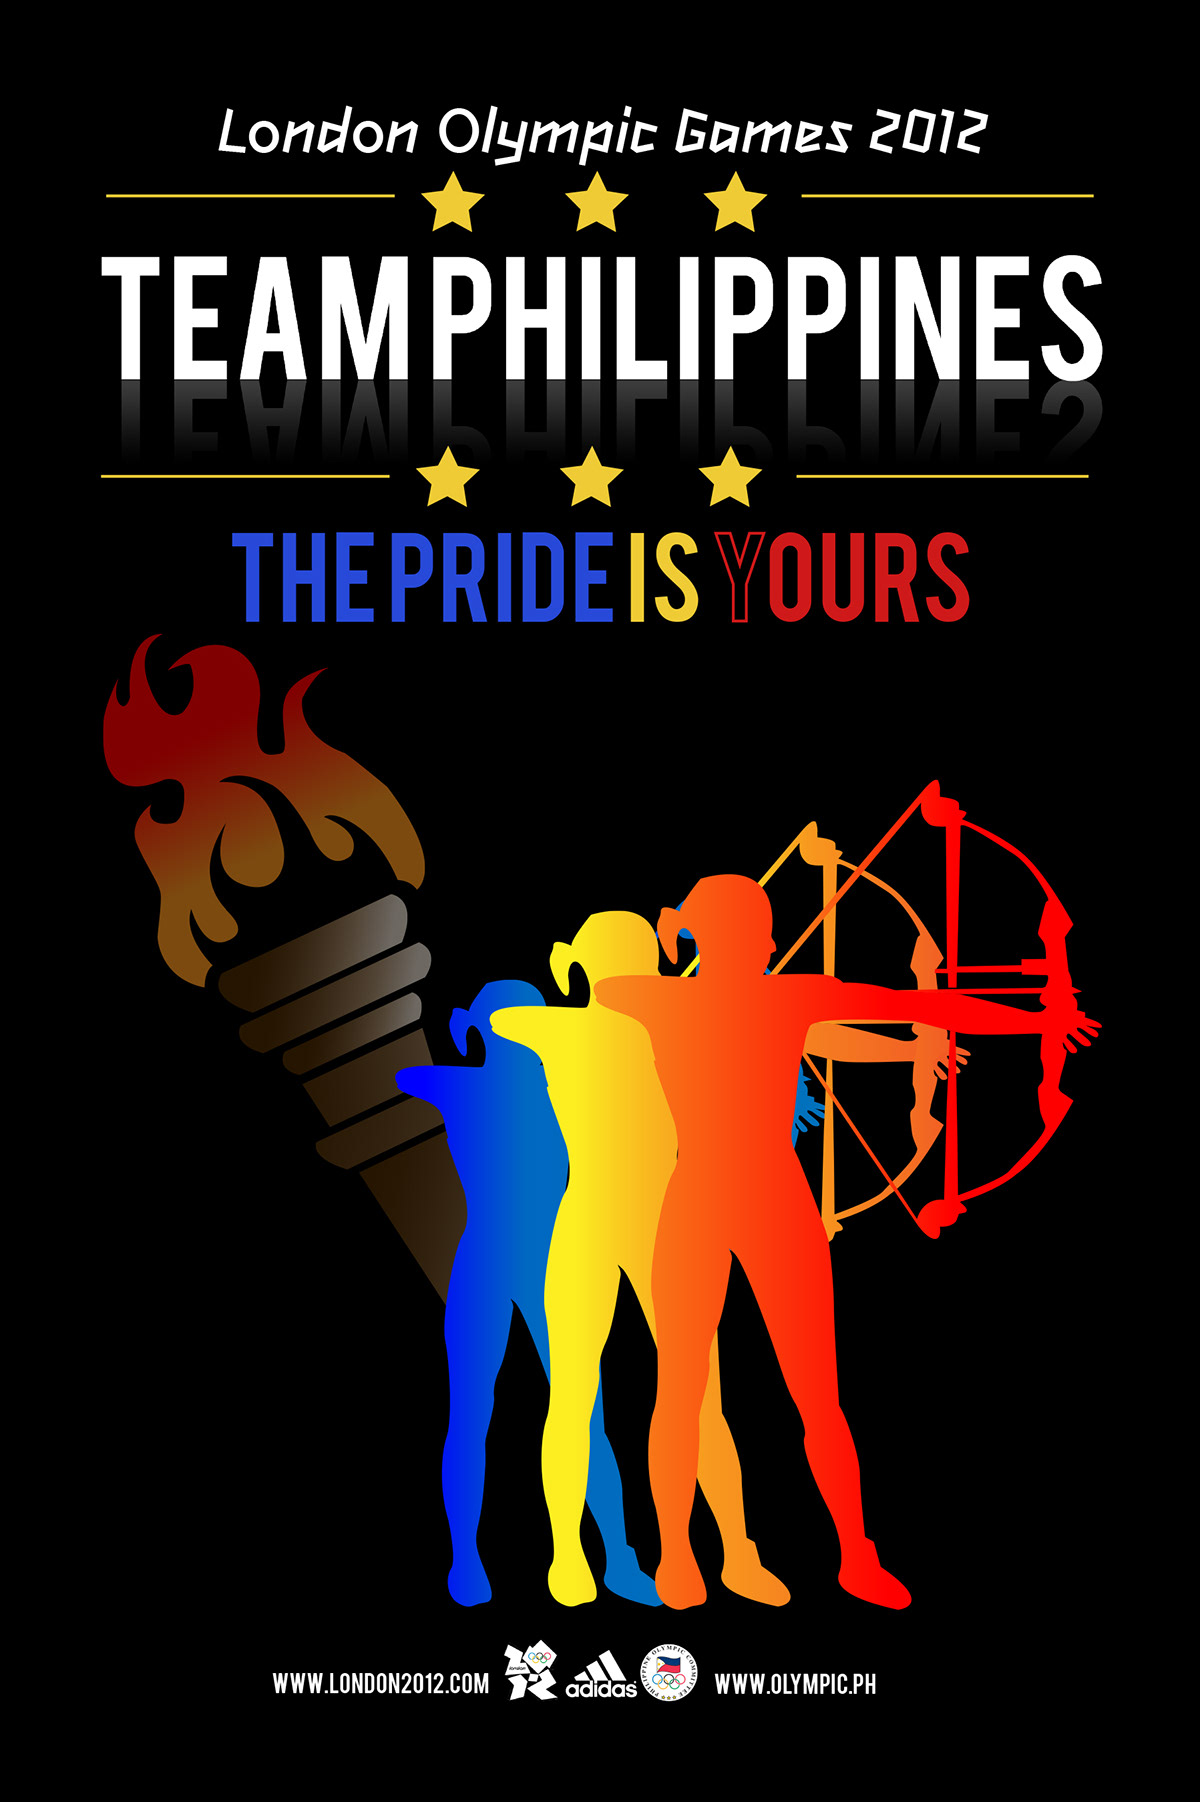 team philippines philippine team black London Olympic Games three stars yellow blue red